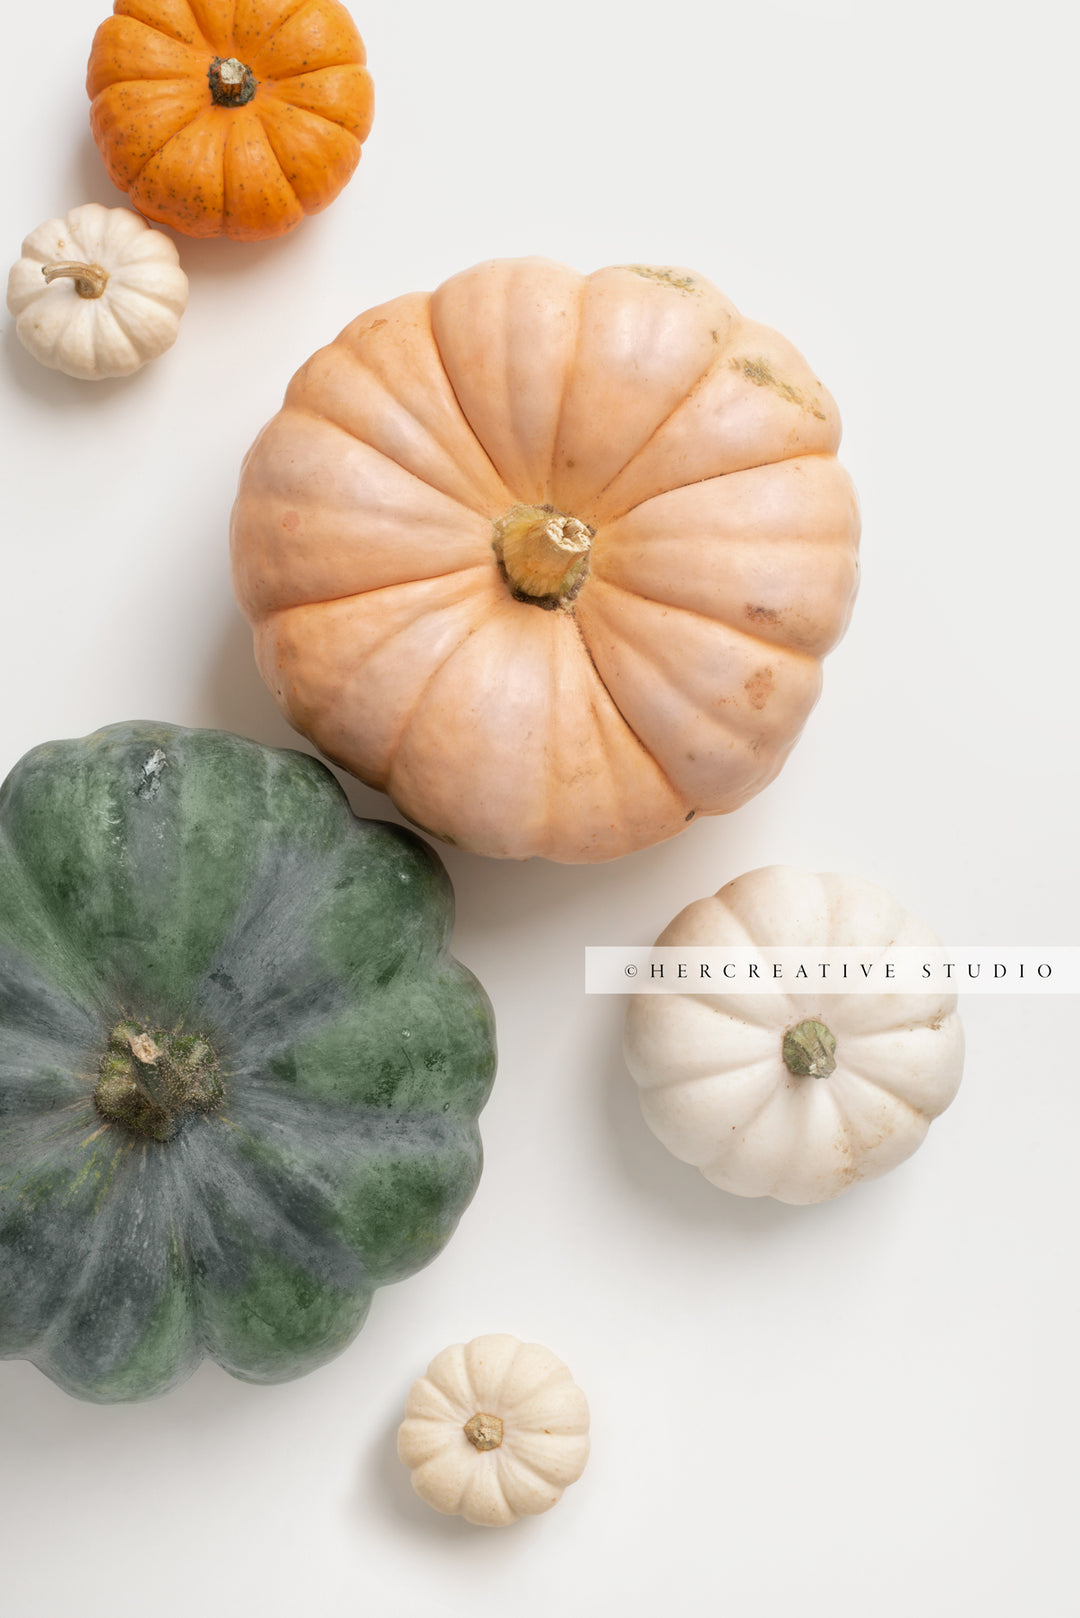 Pumpkins on White Background 2. Digital Stock Image.